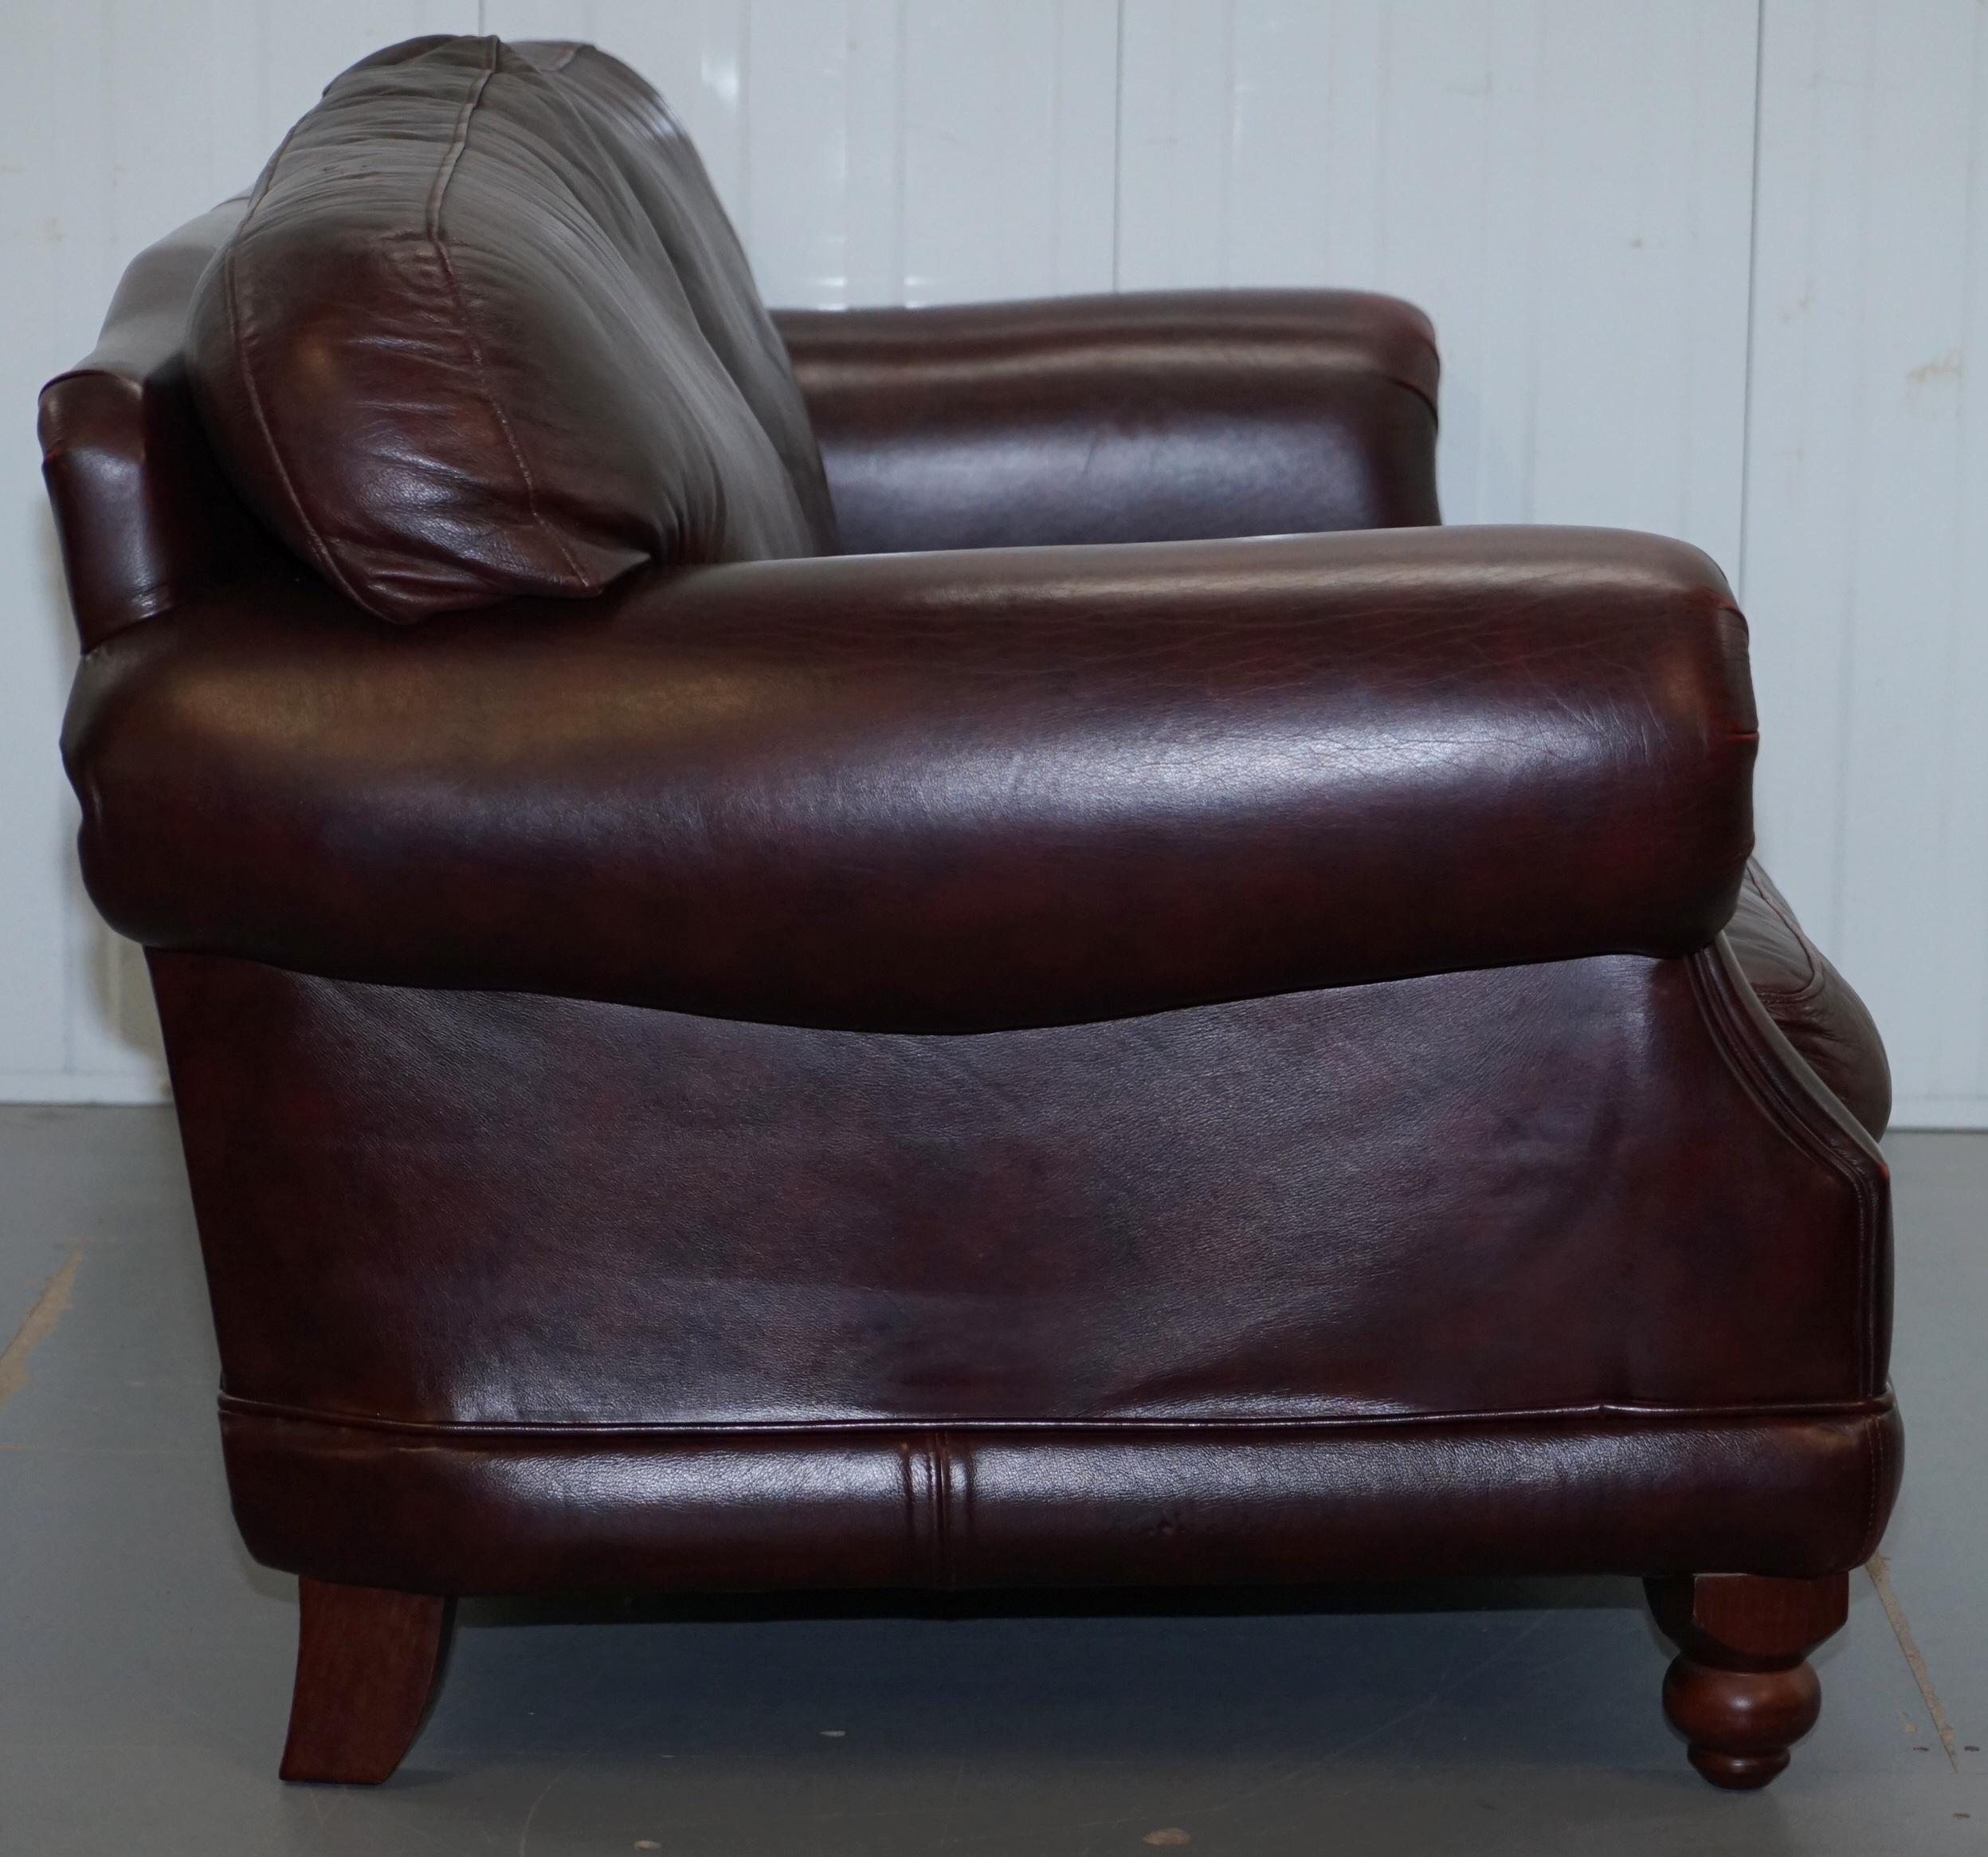 1 of 2 Thomas Lloyd Consort Oxblood Leather Three-Seat Sofas 1